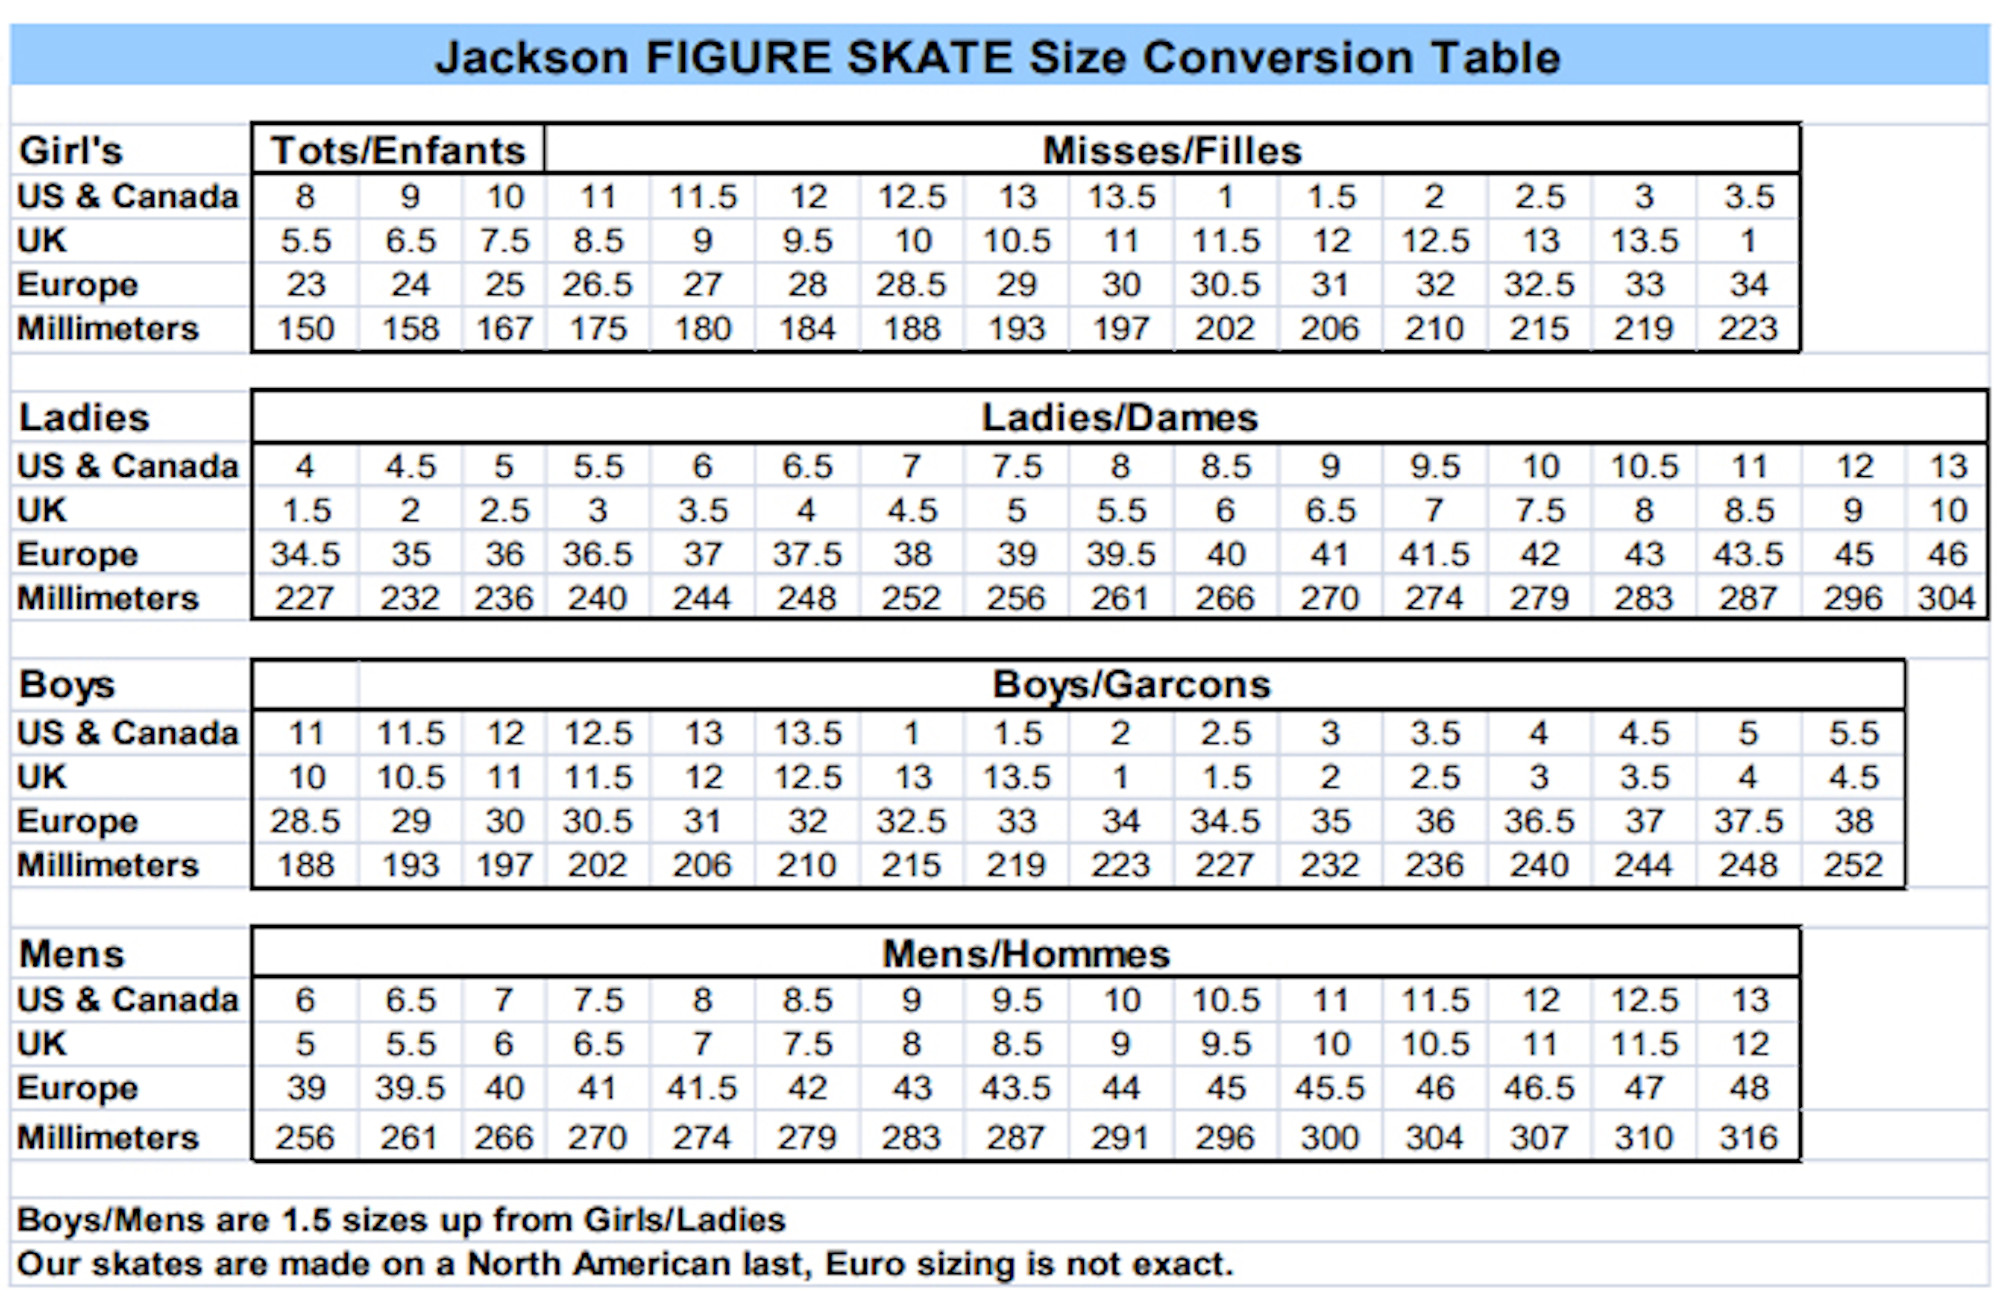 Jackson Ice Skates Evo Fusion Misses FS2021 with Mark IV Blade - image 3 of 3